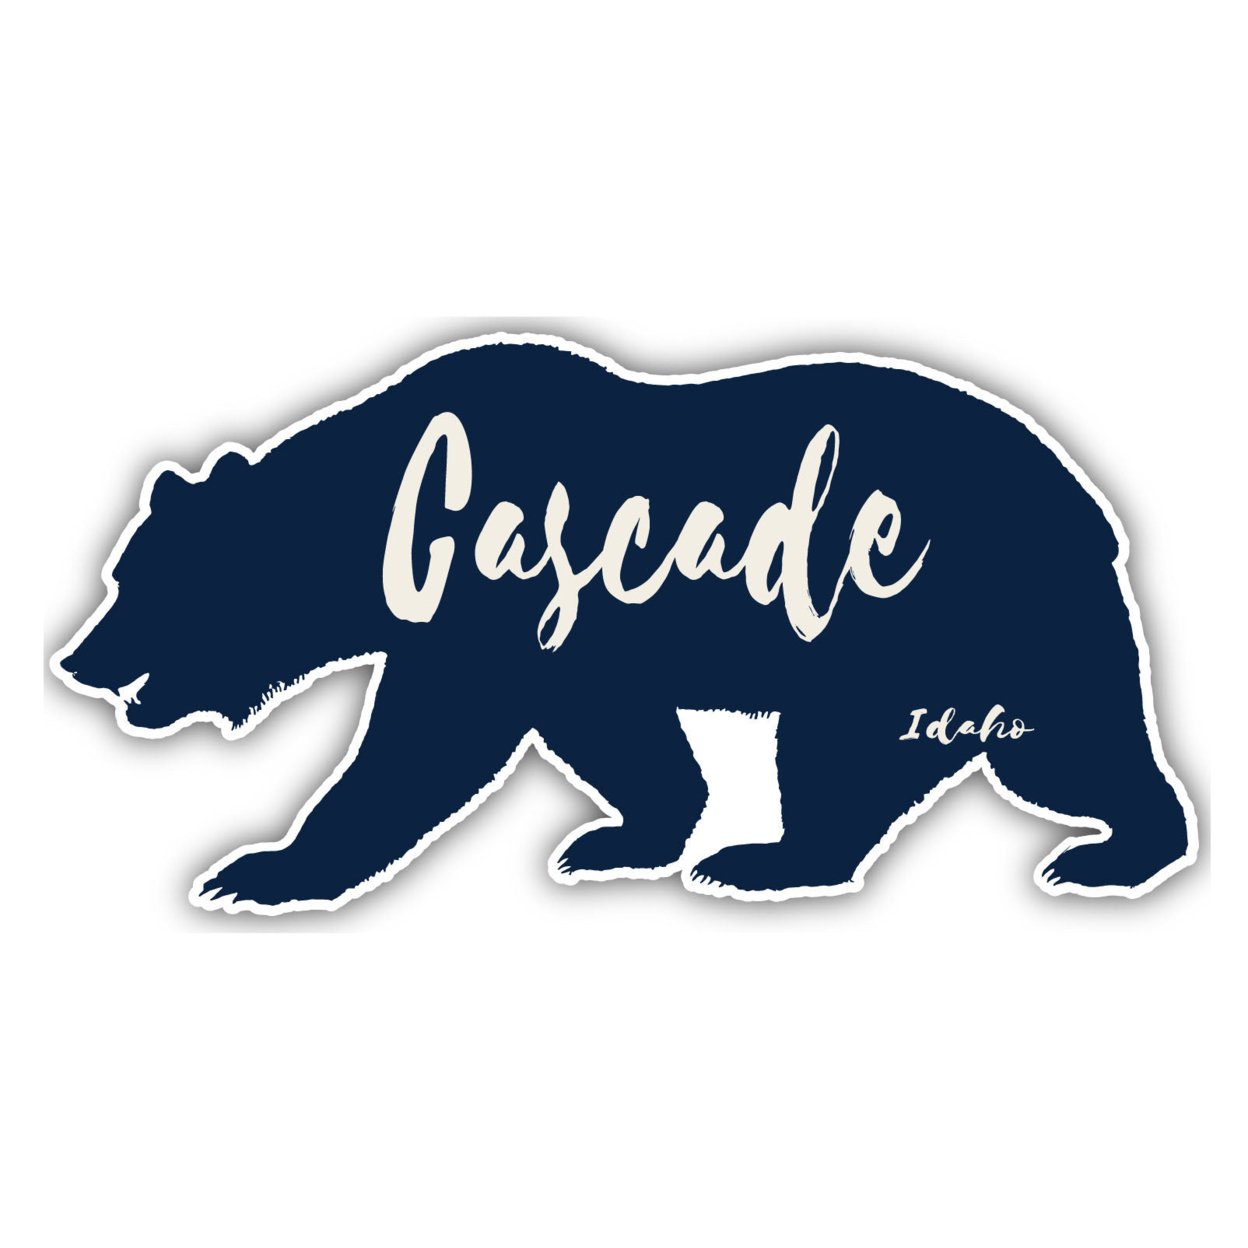 Cascade Idaho Souvenir Decorative Stickers (Choose Theme And Size) - 4-Pack, 10-Inch, Bear